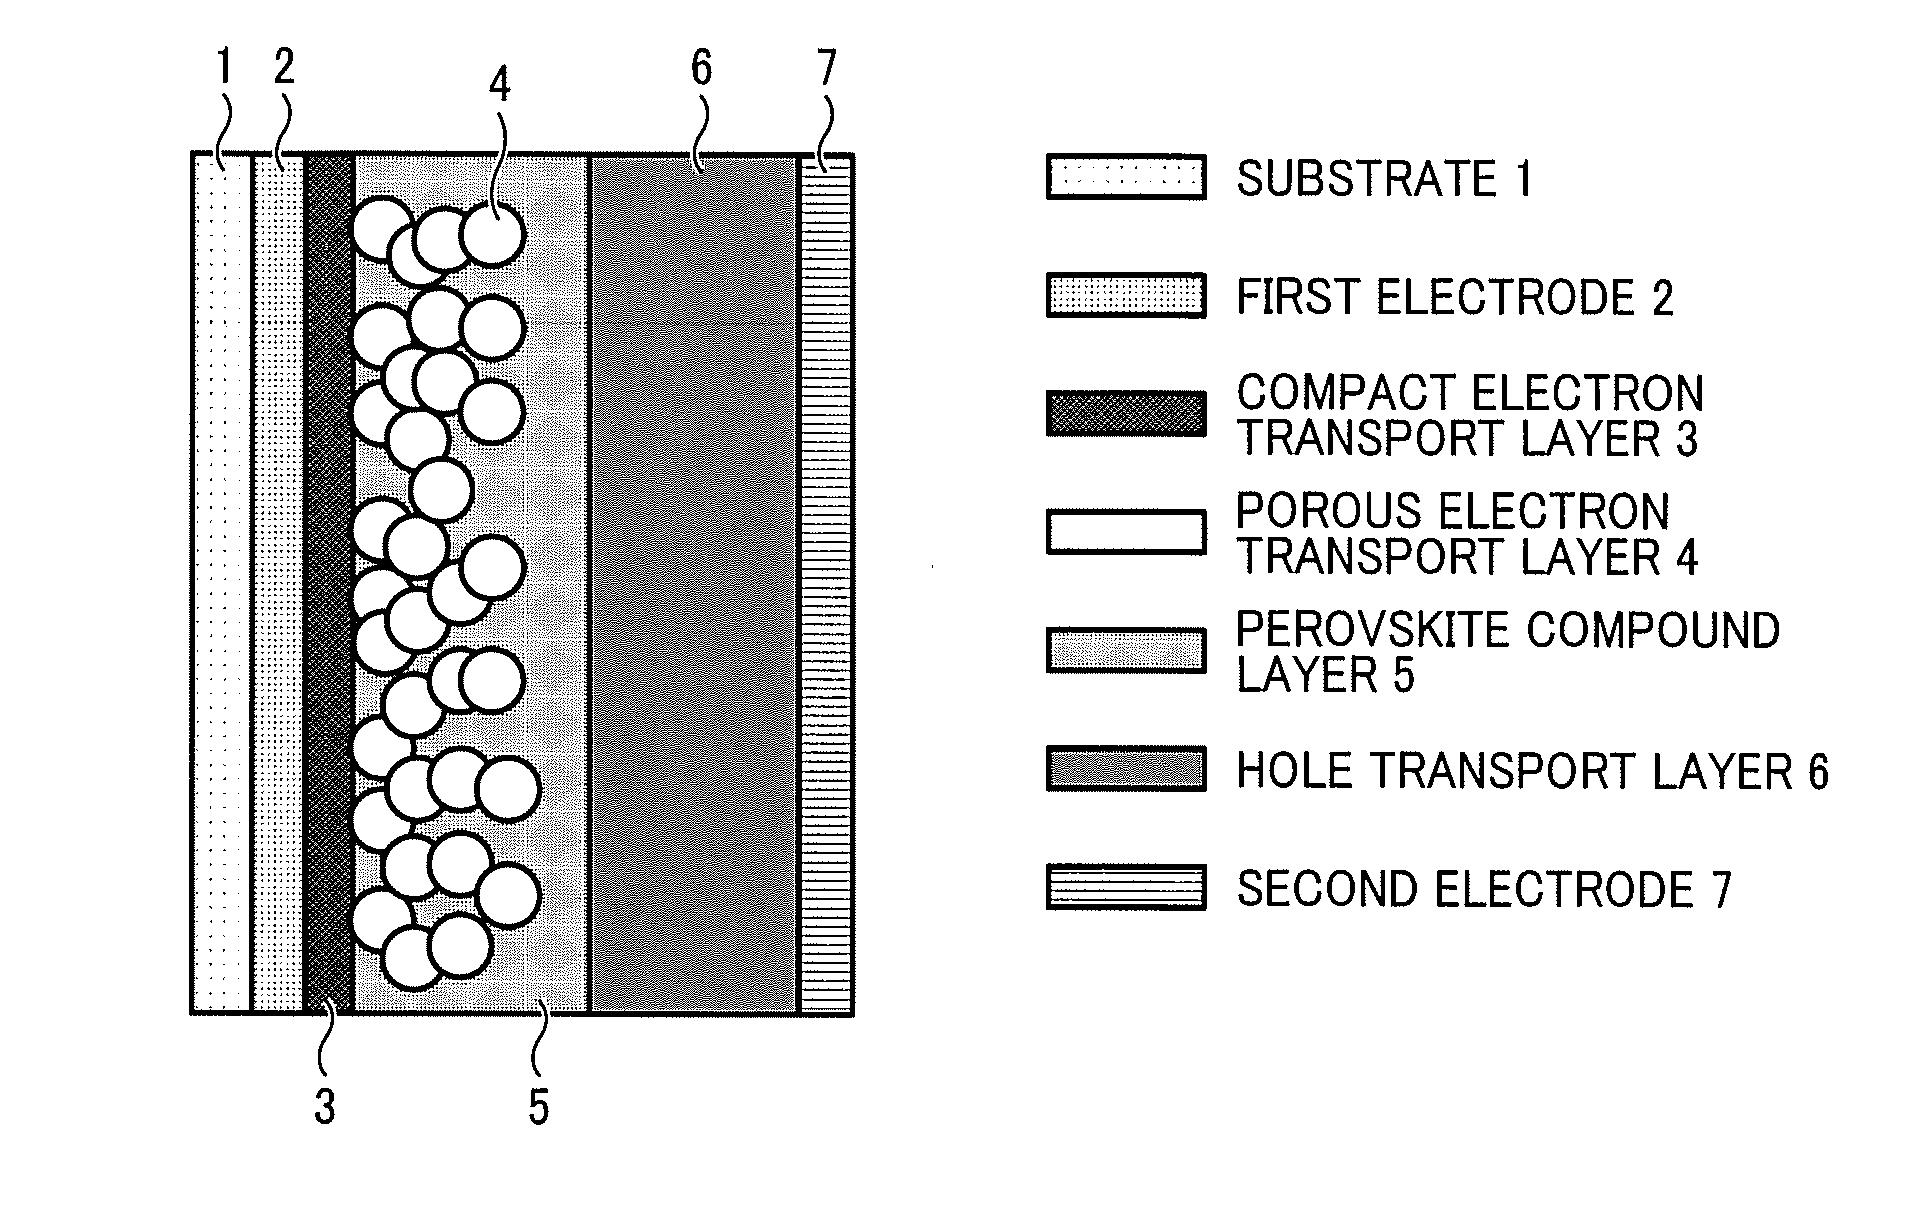 Perovskite solar cell